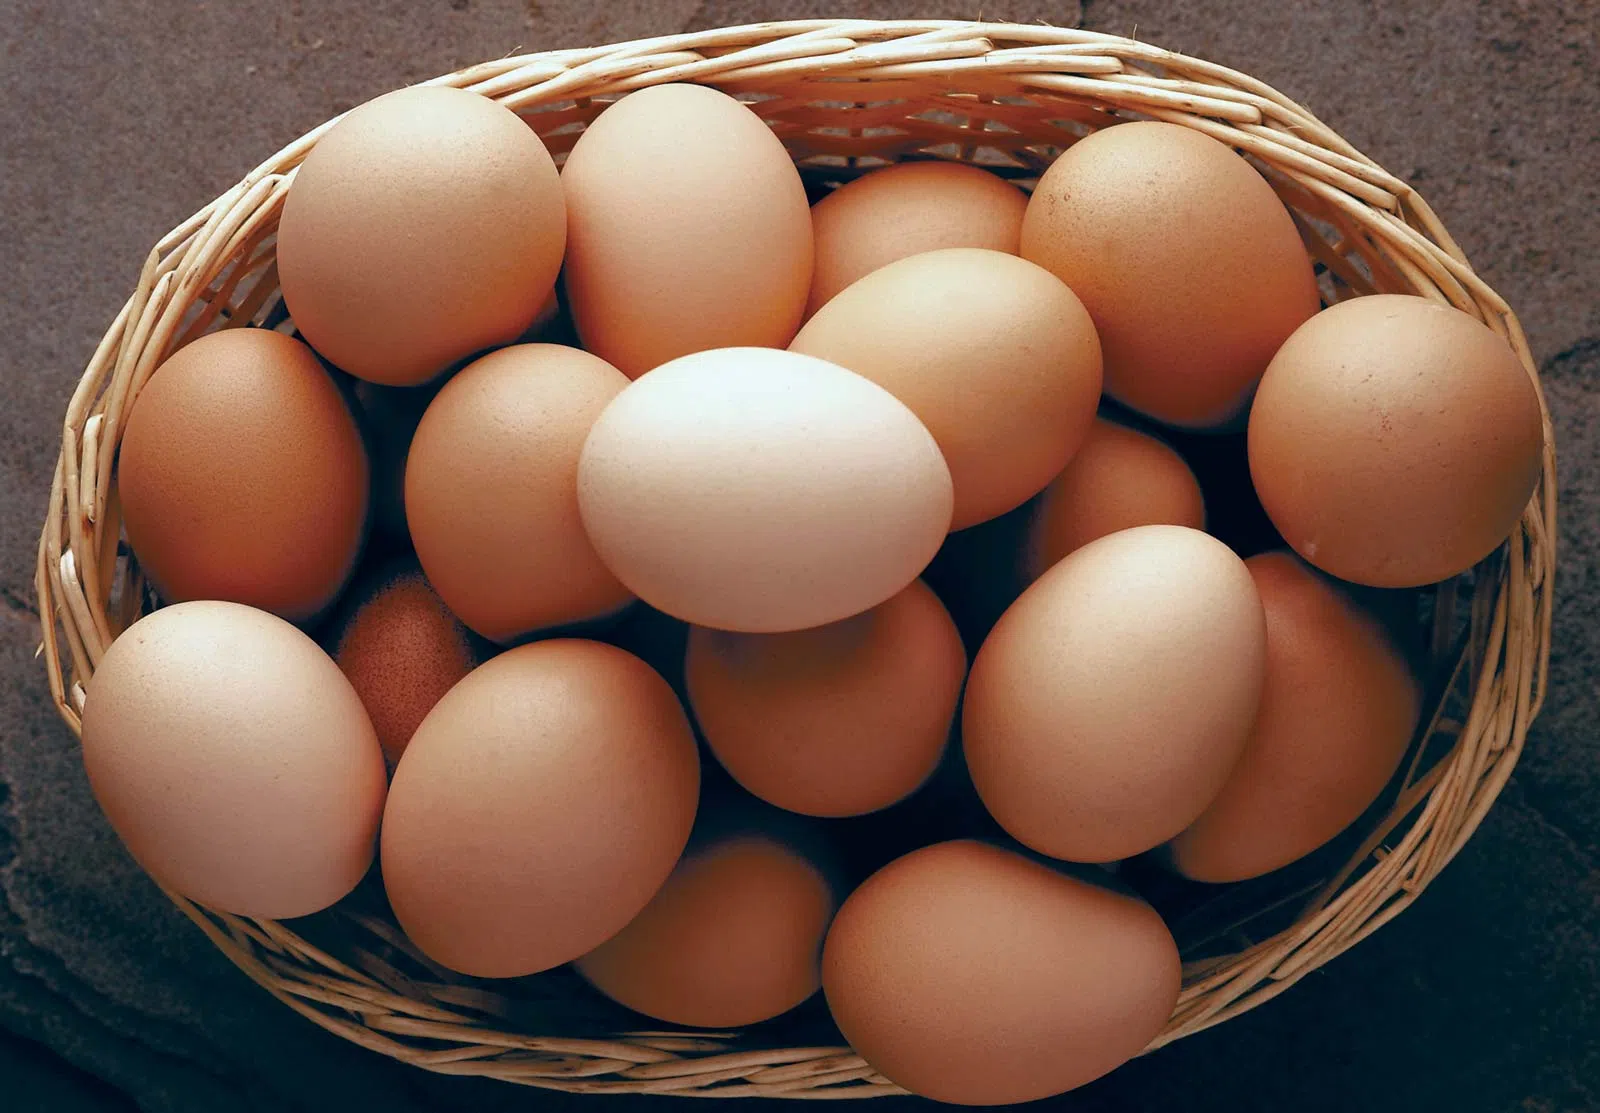 Mississippi egg producer: Bird flu brings higher egg prices